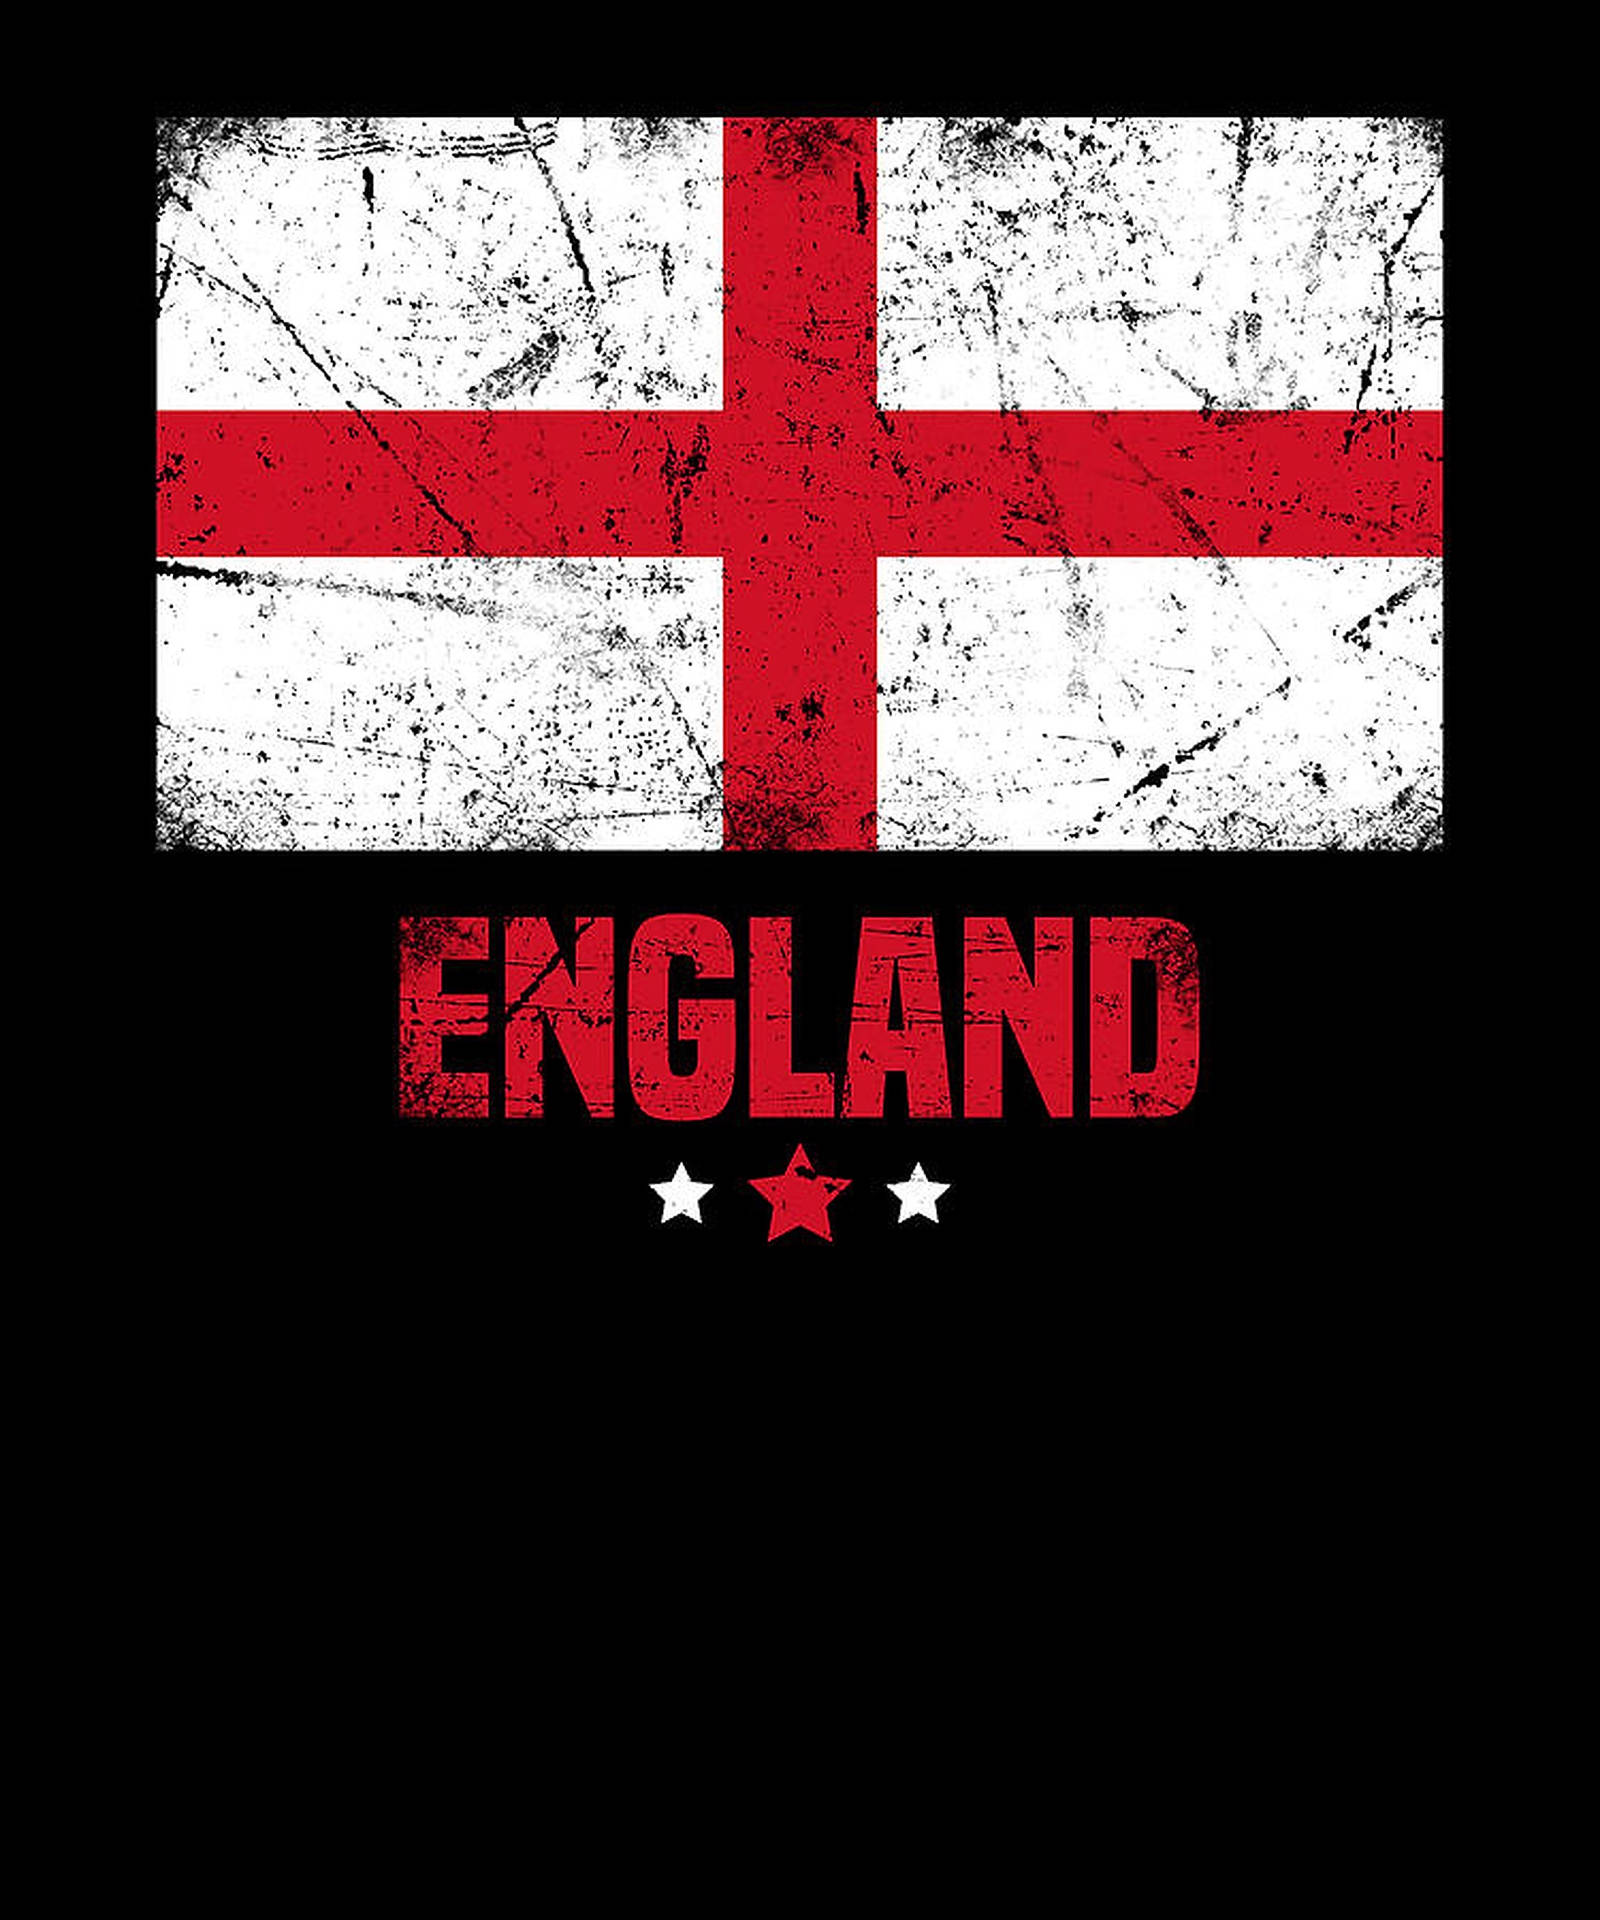 England's Emblem - The St. George's Cross Flag